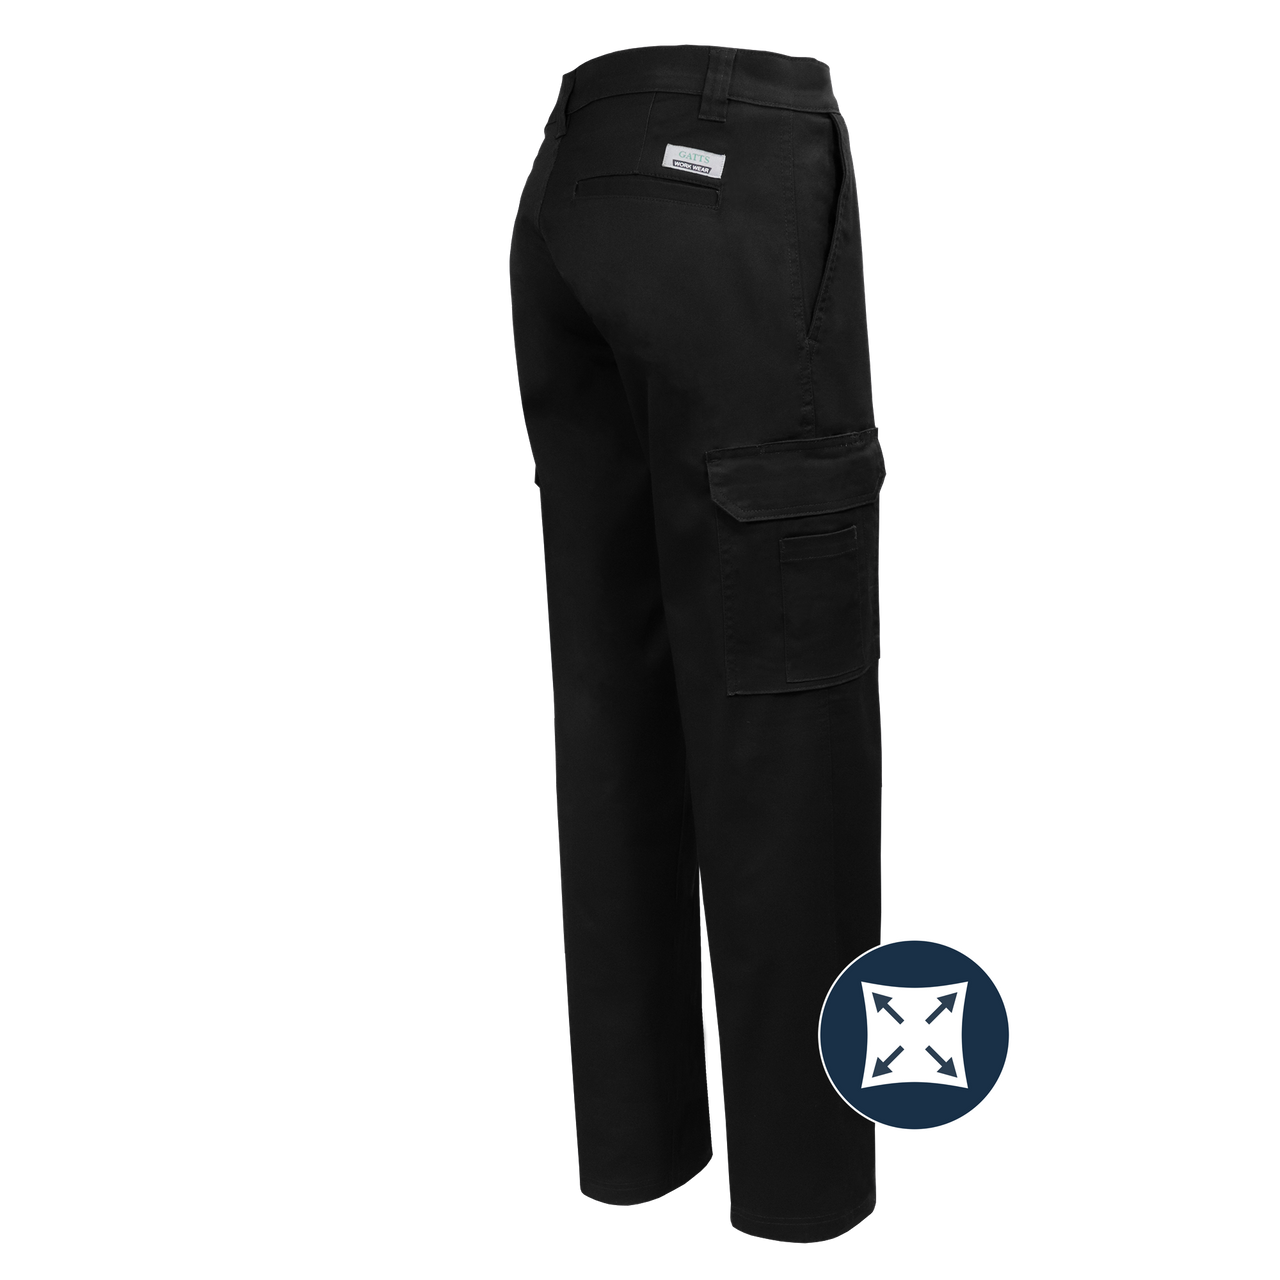 011EX - Pantalon travail cargo extensible||011EX - Workwear Stretch cargo pant